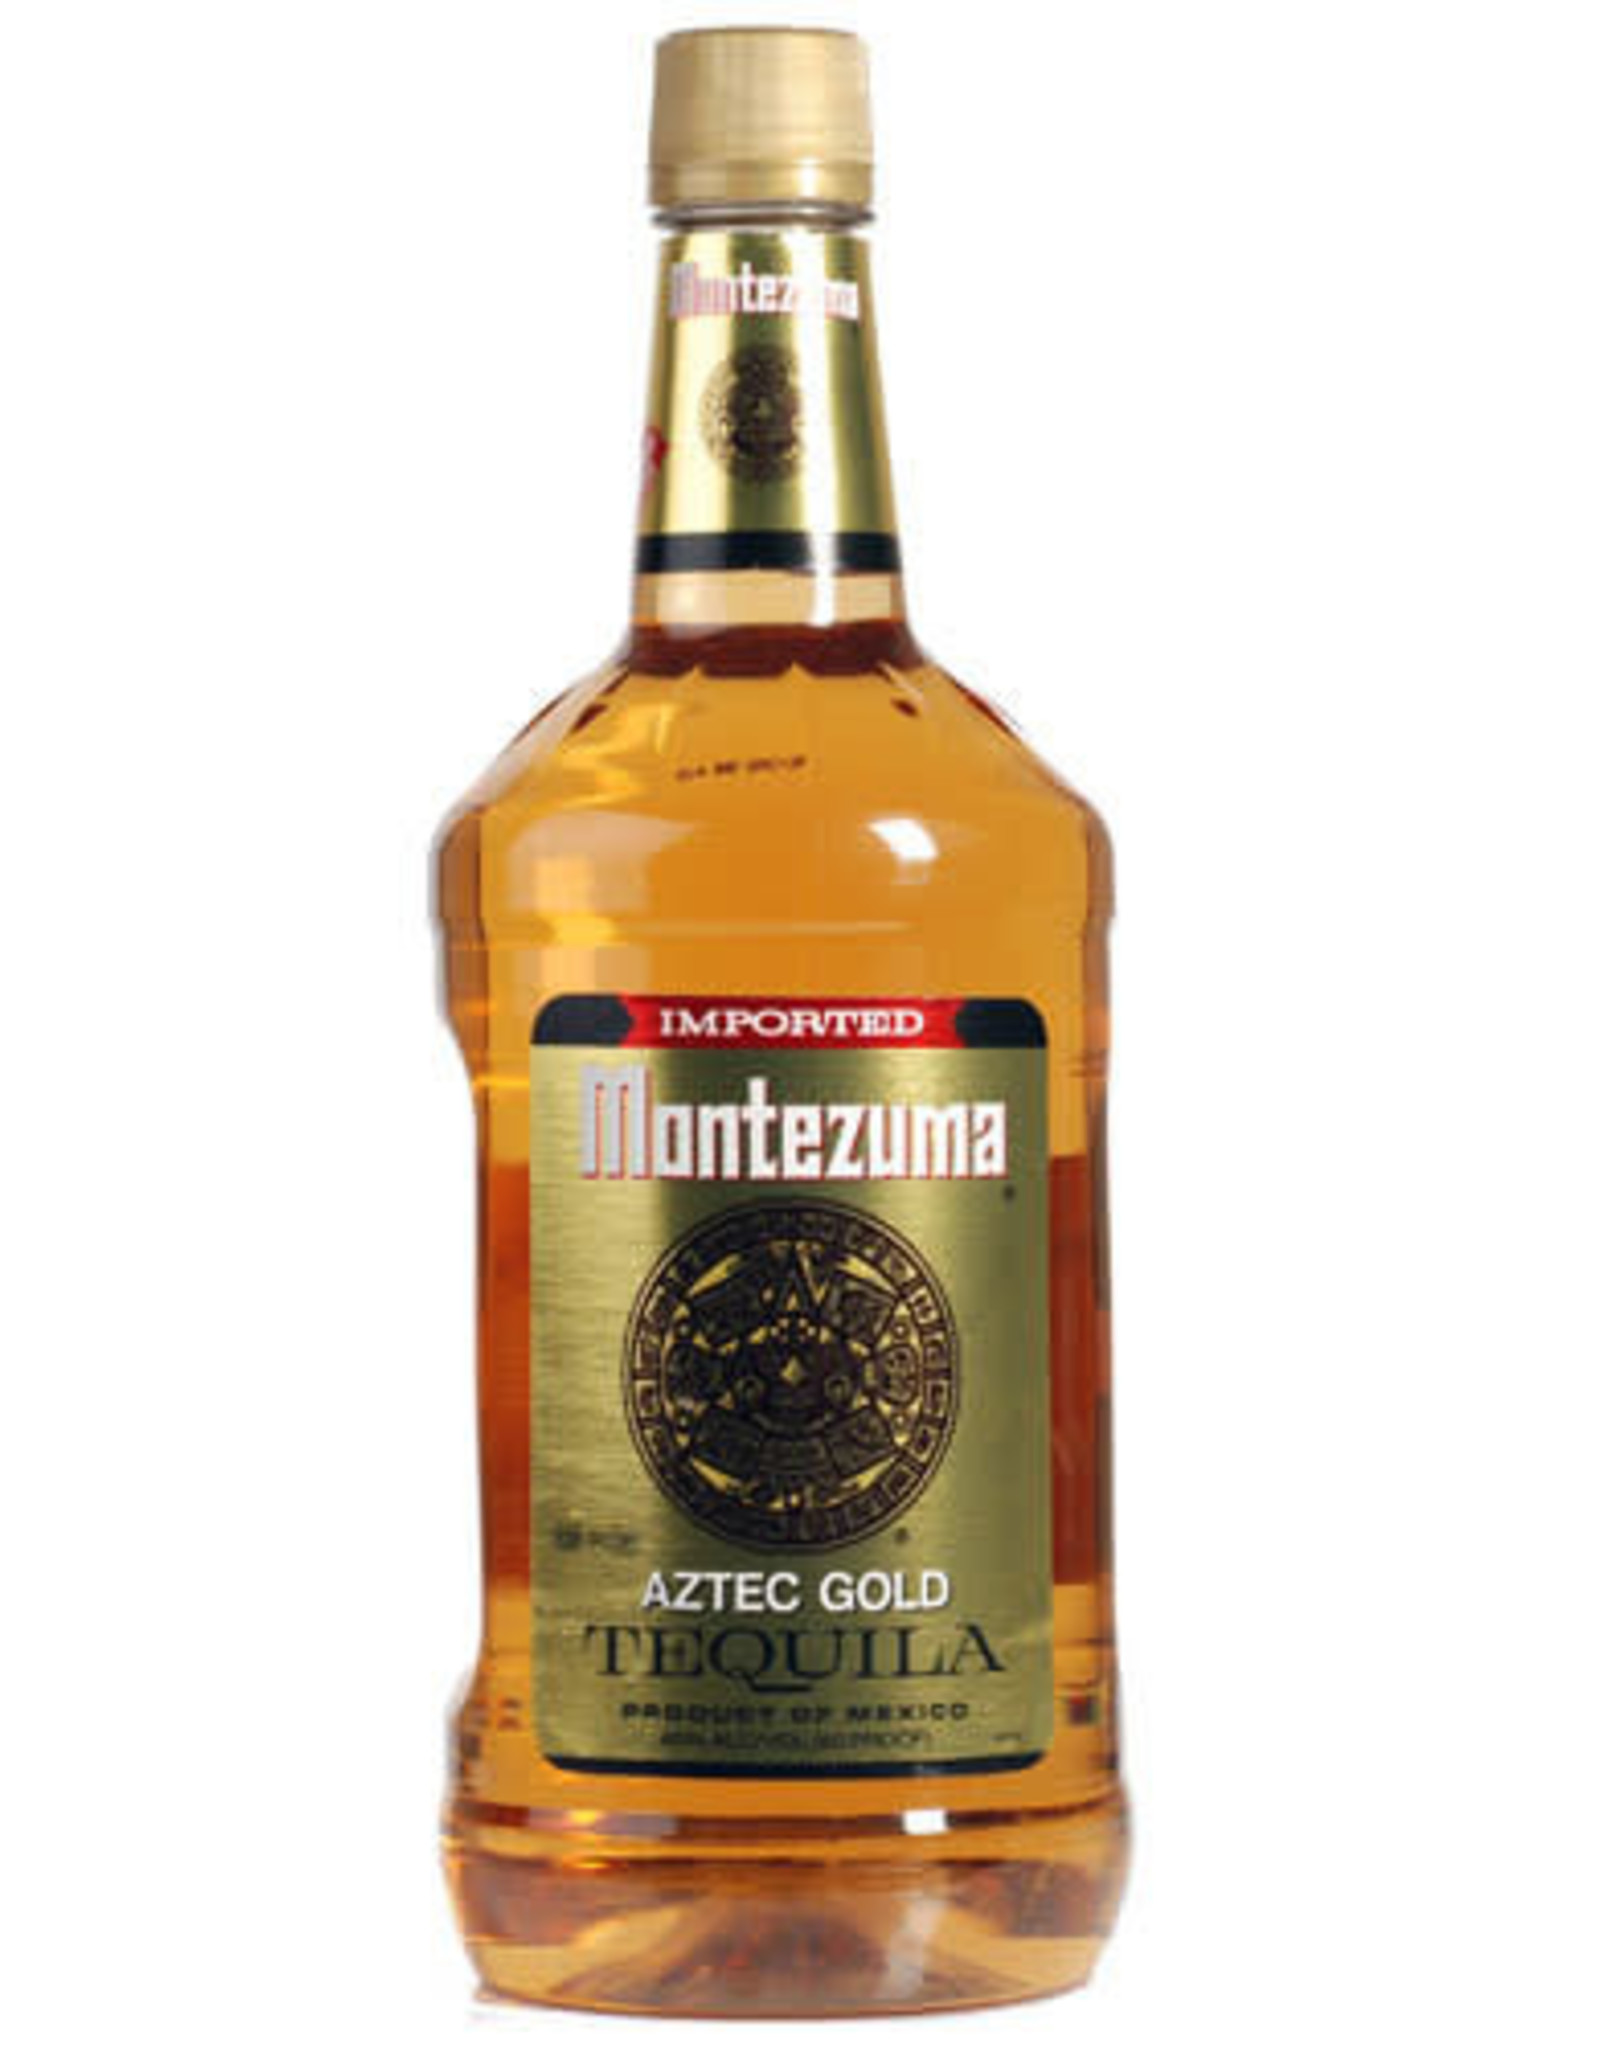 Montezuma Montezuma Gold Tequila